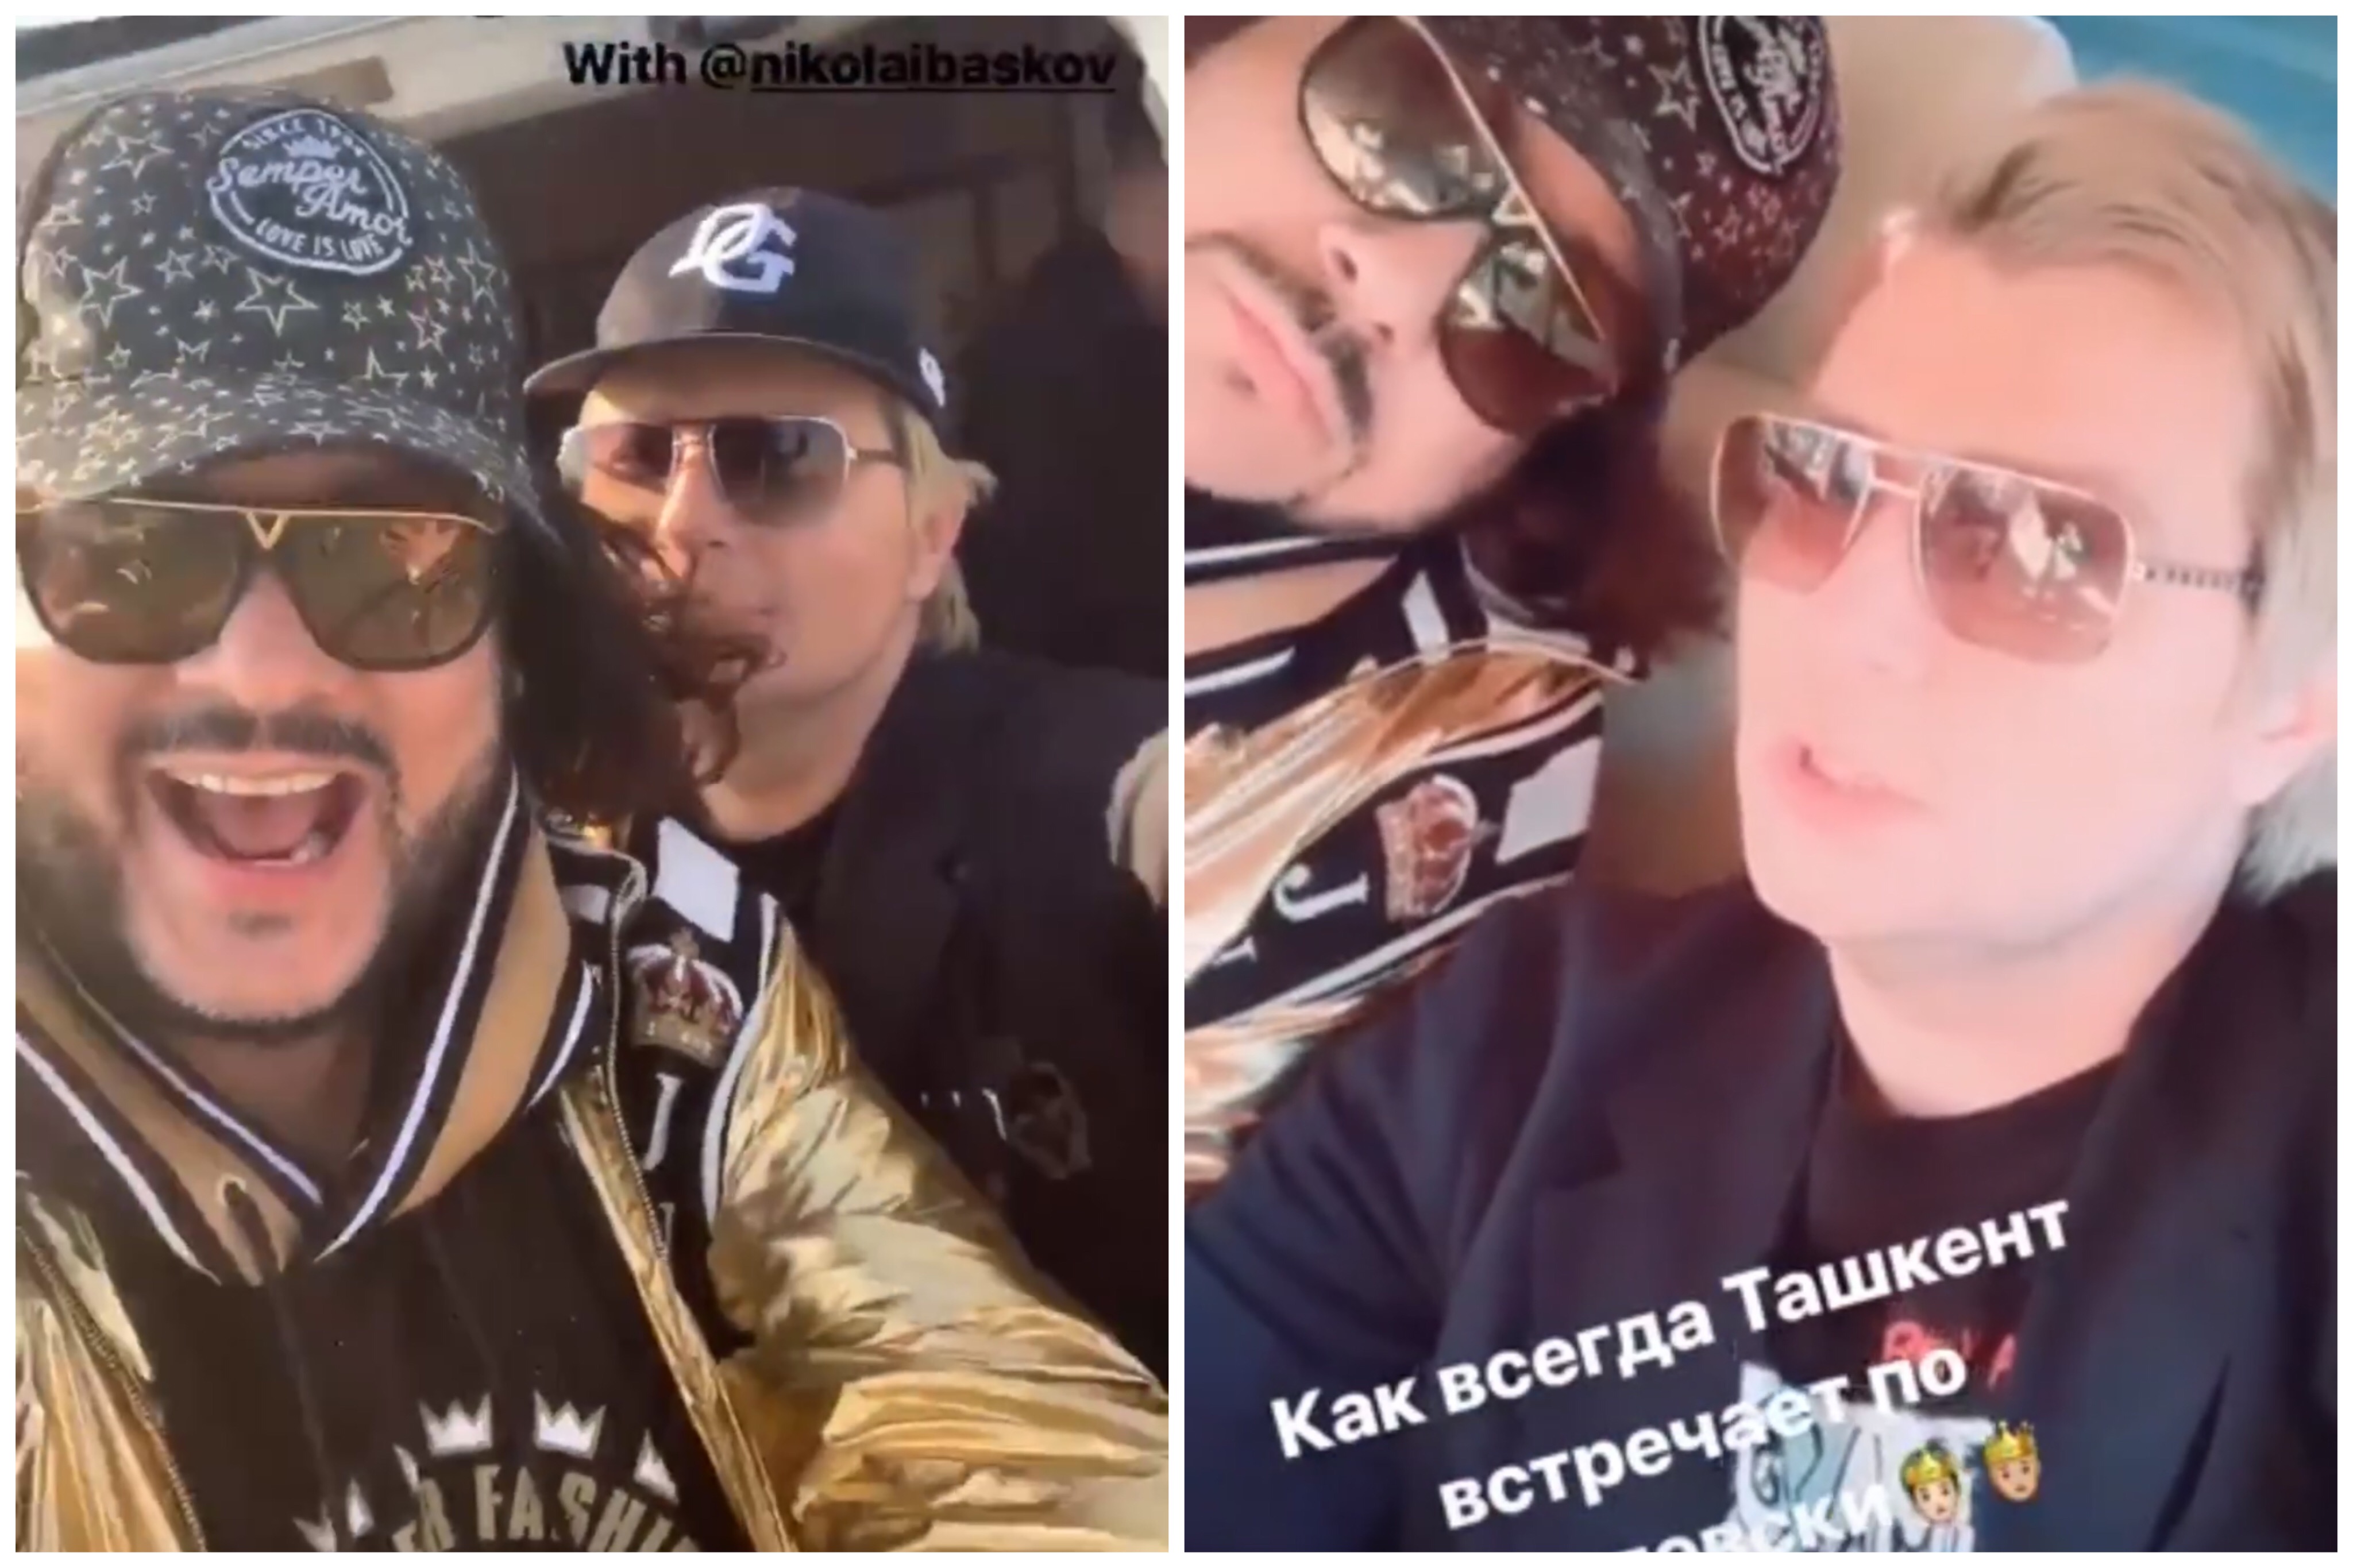 Ташкент встретил Киркорова и Баскова «жарко» и «по-королевски» (видео)